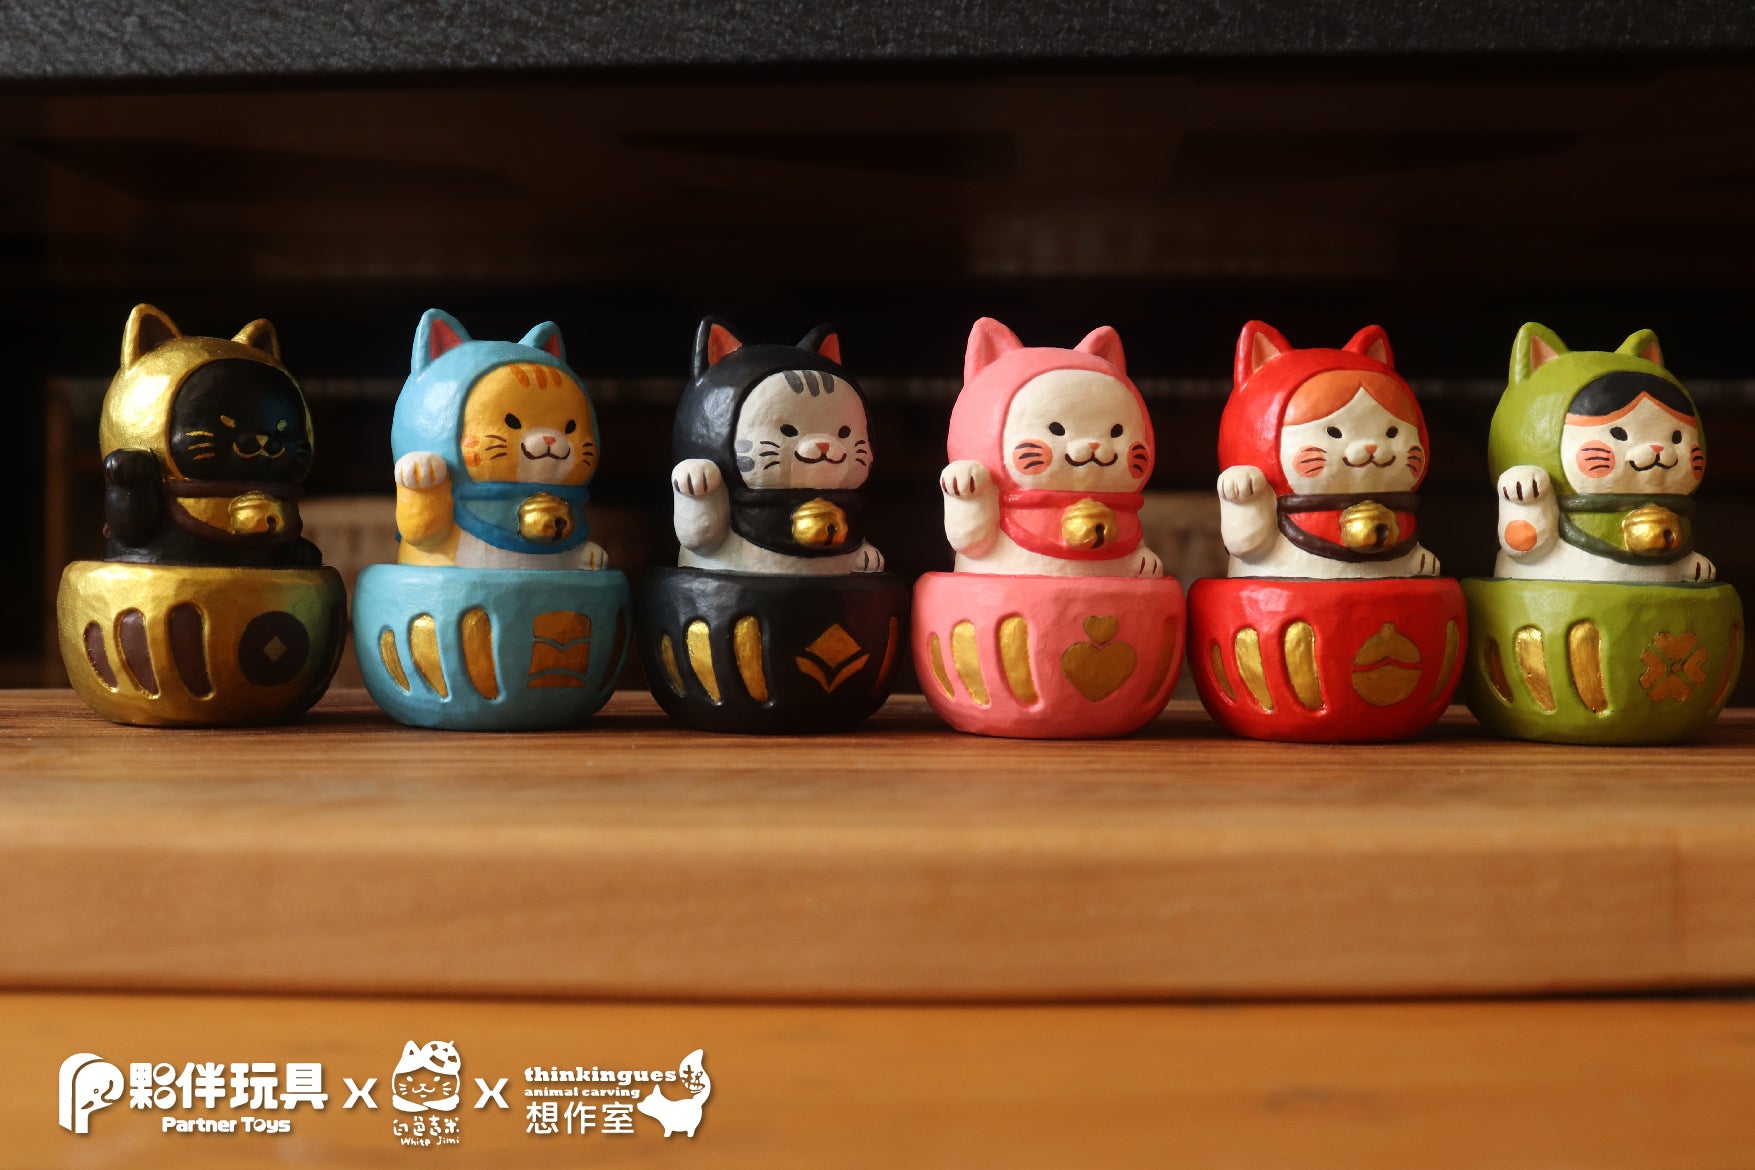 Daruma Fortune Cat Gacha Series: A group of small ceramic cat figurines and statues.